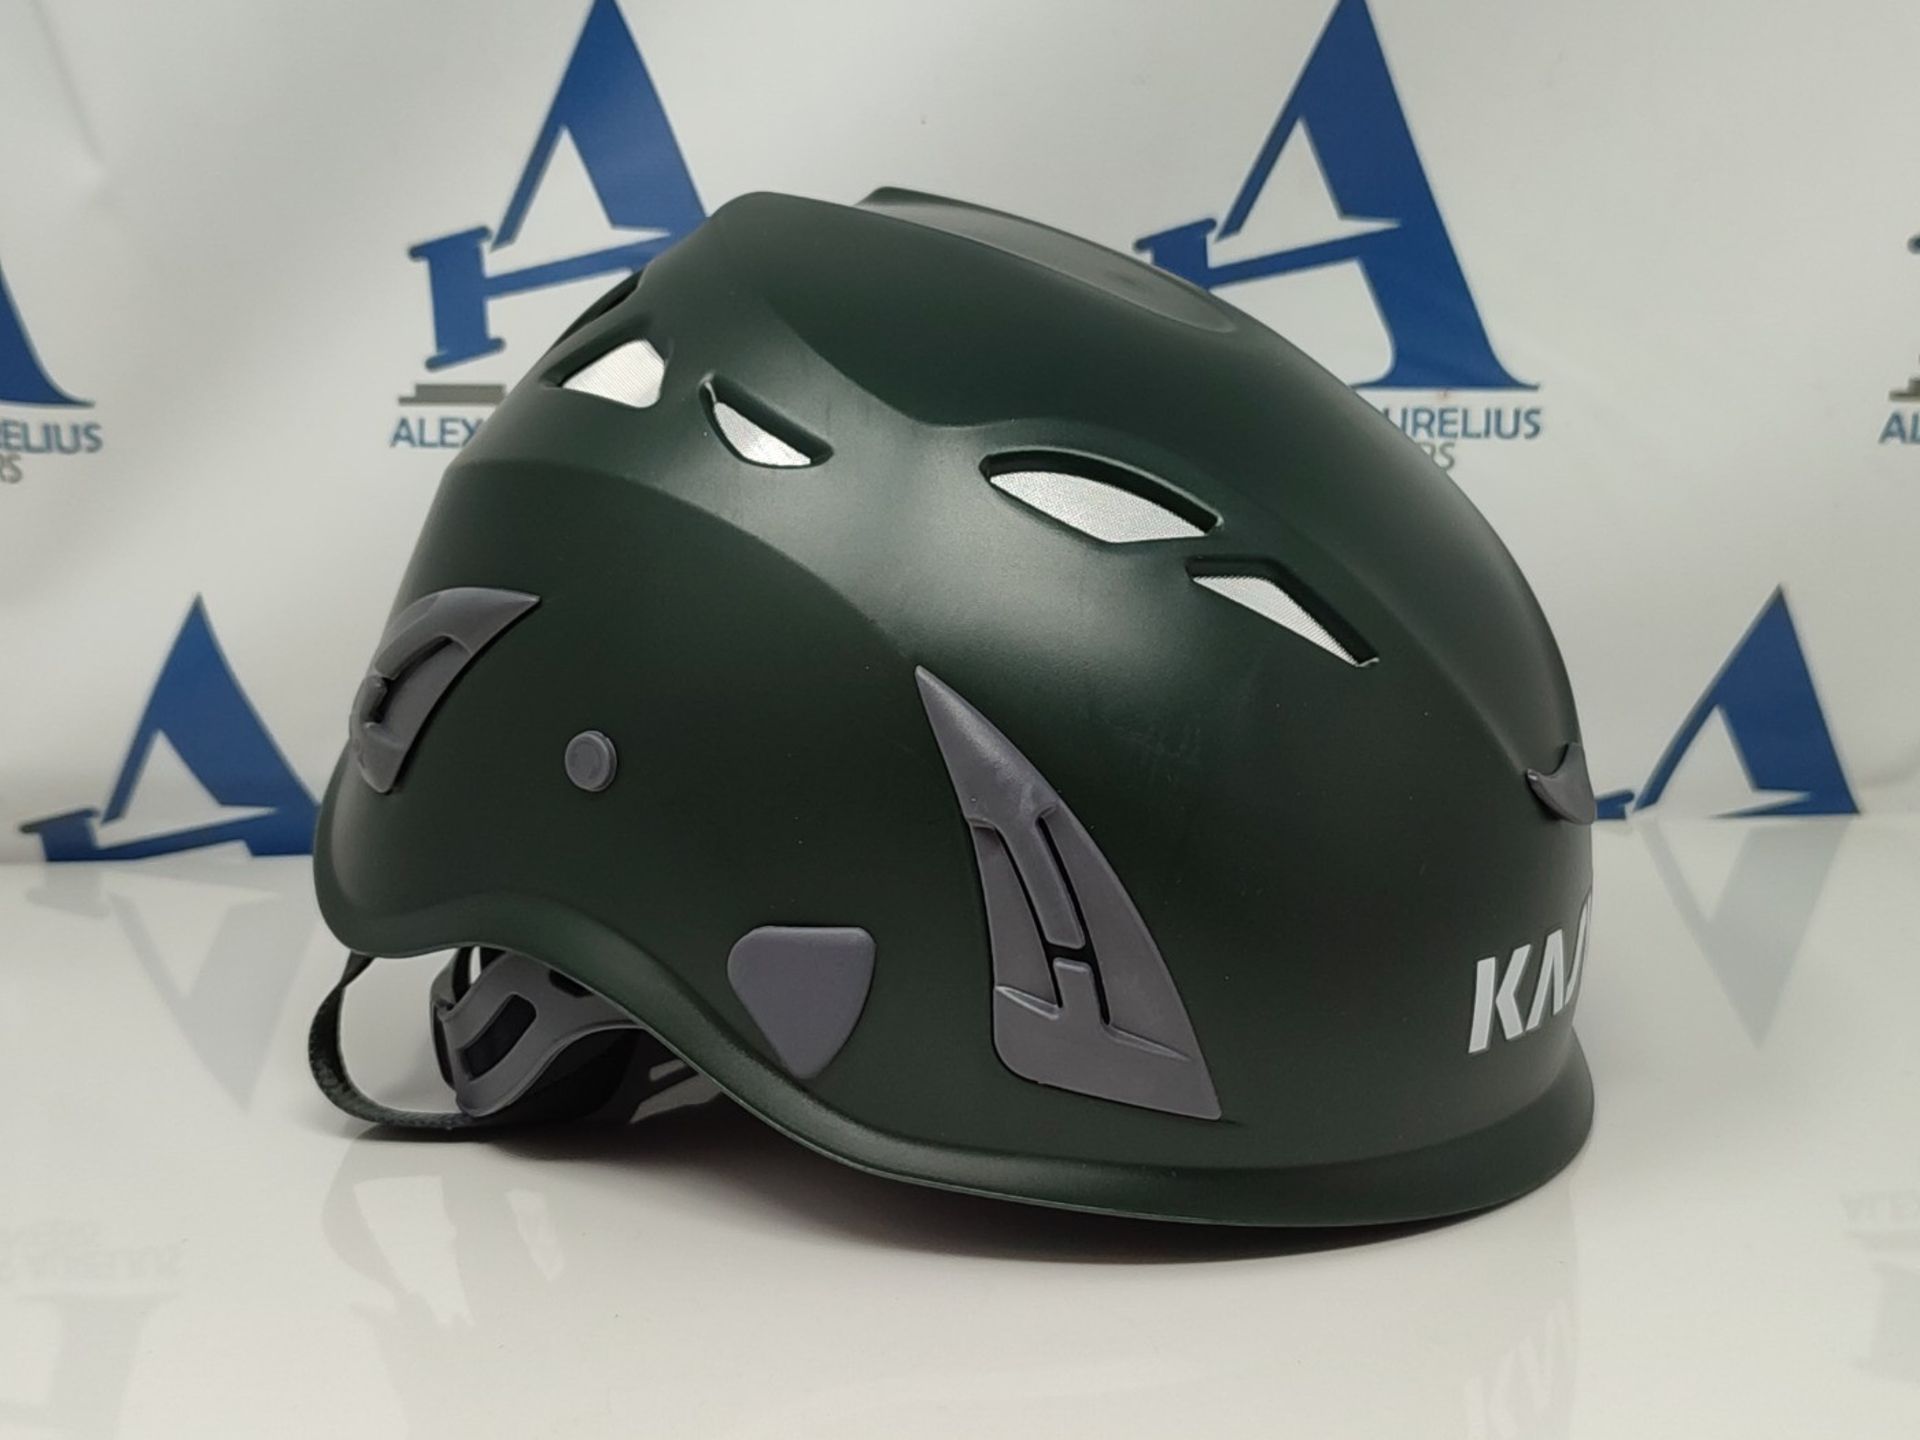 Kask WHE00008-206 Size 51-63 cm "Plasma AQ" Helmet - Dark Green - Image 2 of 3